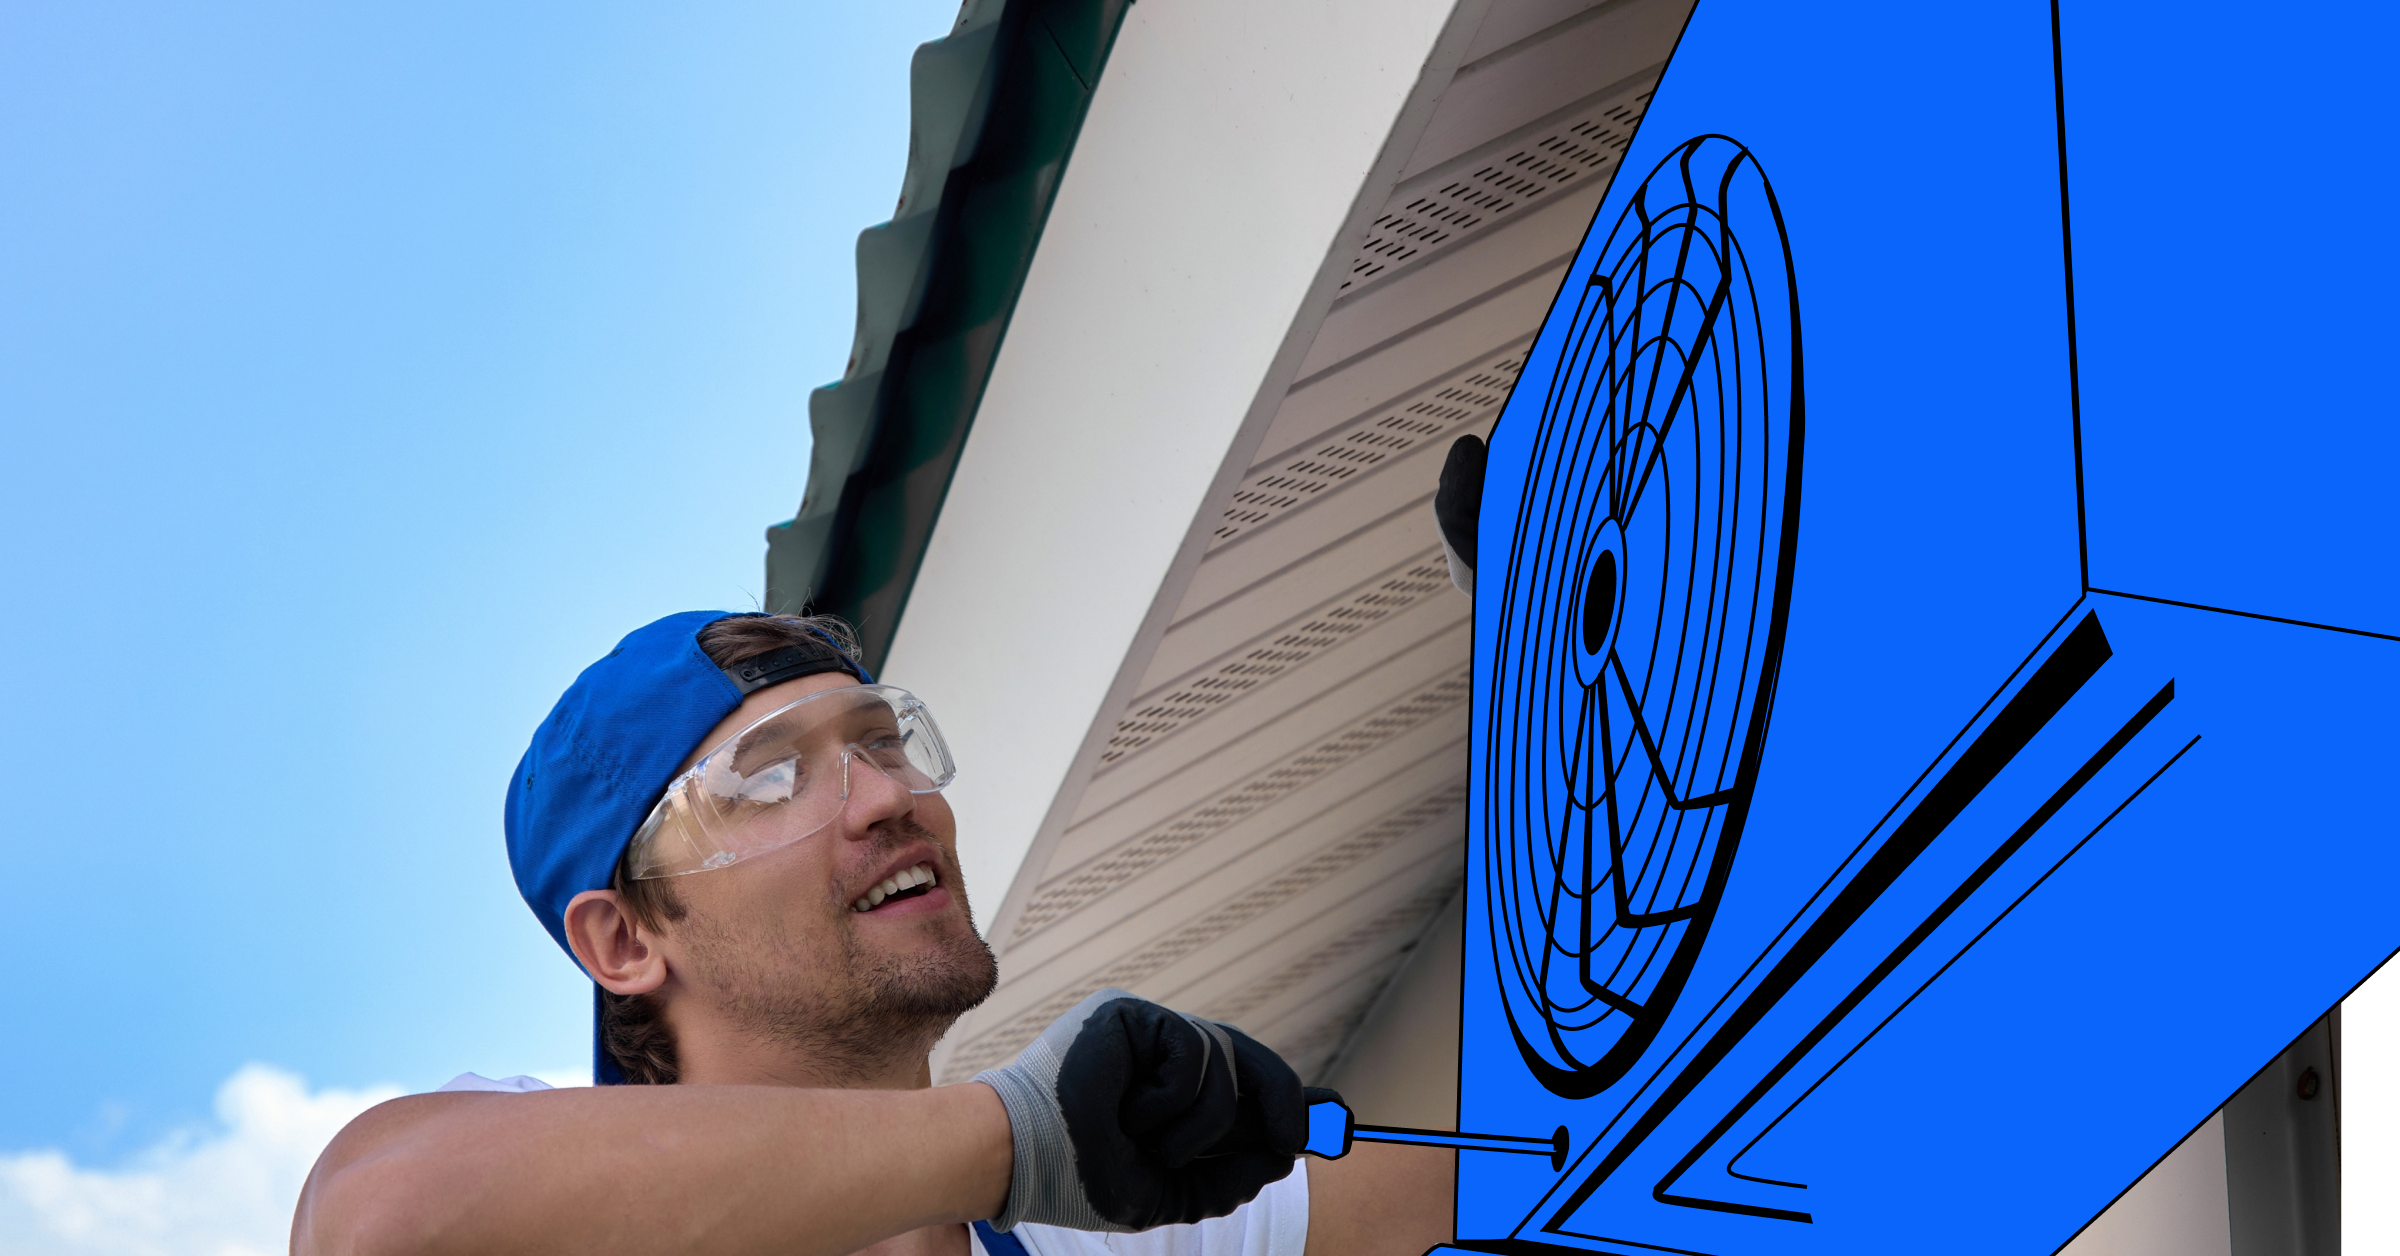 "A technician repairing an air conditioning unit, illustrating local aircon repair services."